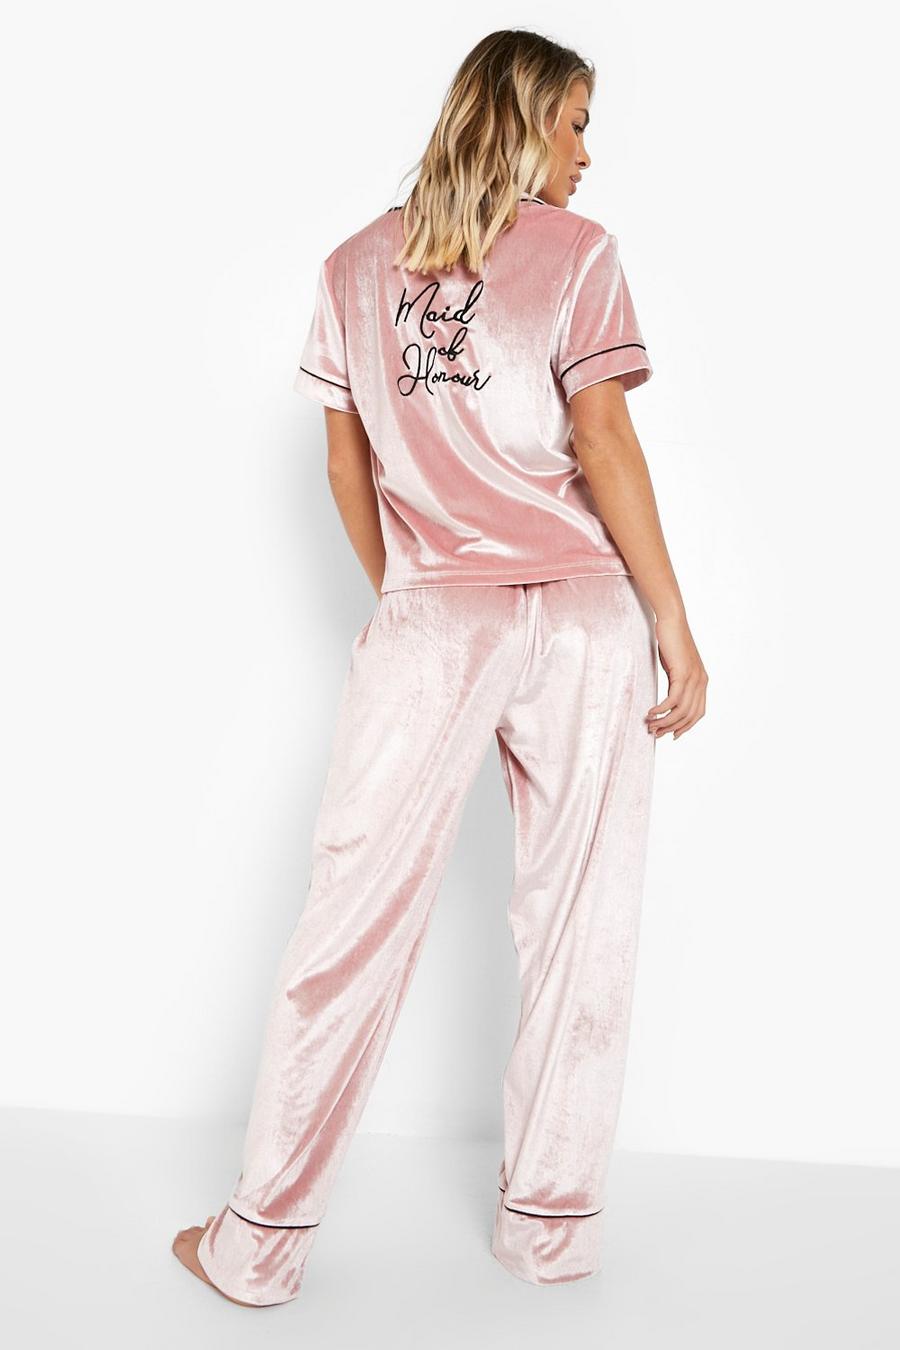 Blush rose Maid Of Honour Velvet Embroidered Pyjama Set